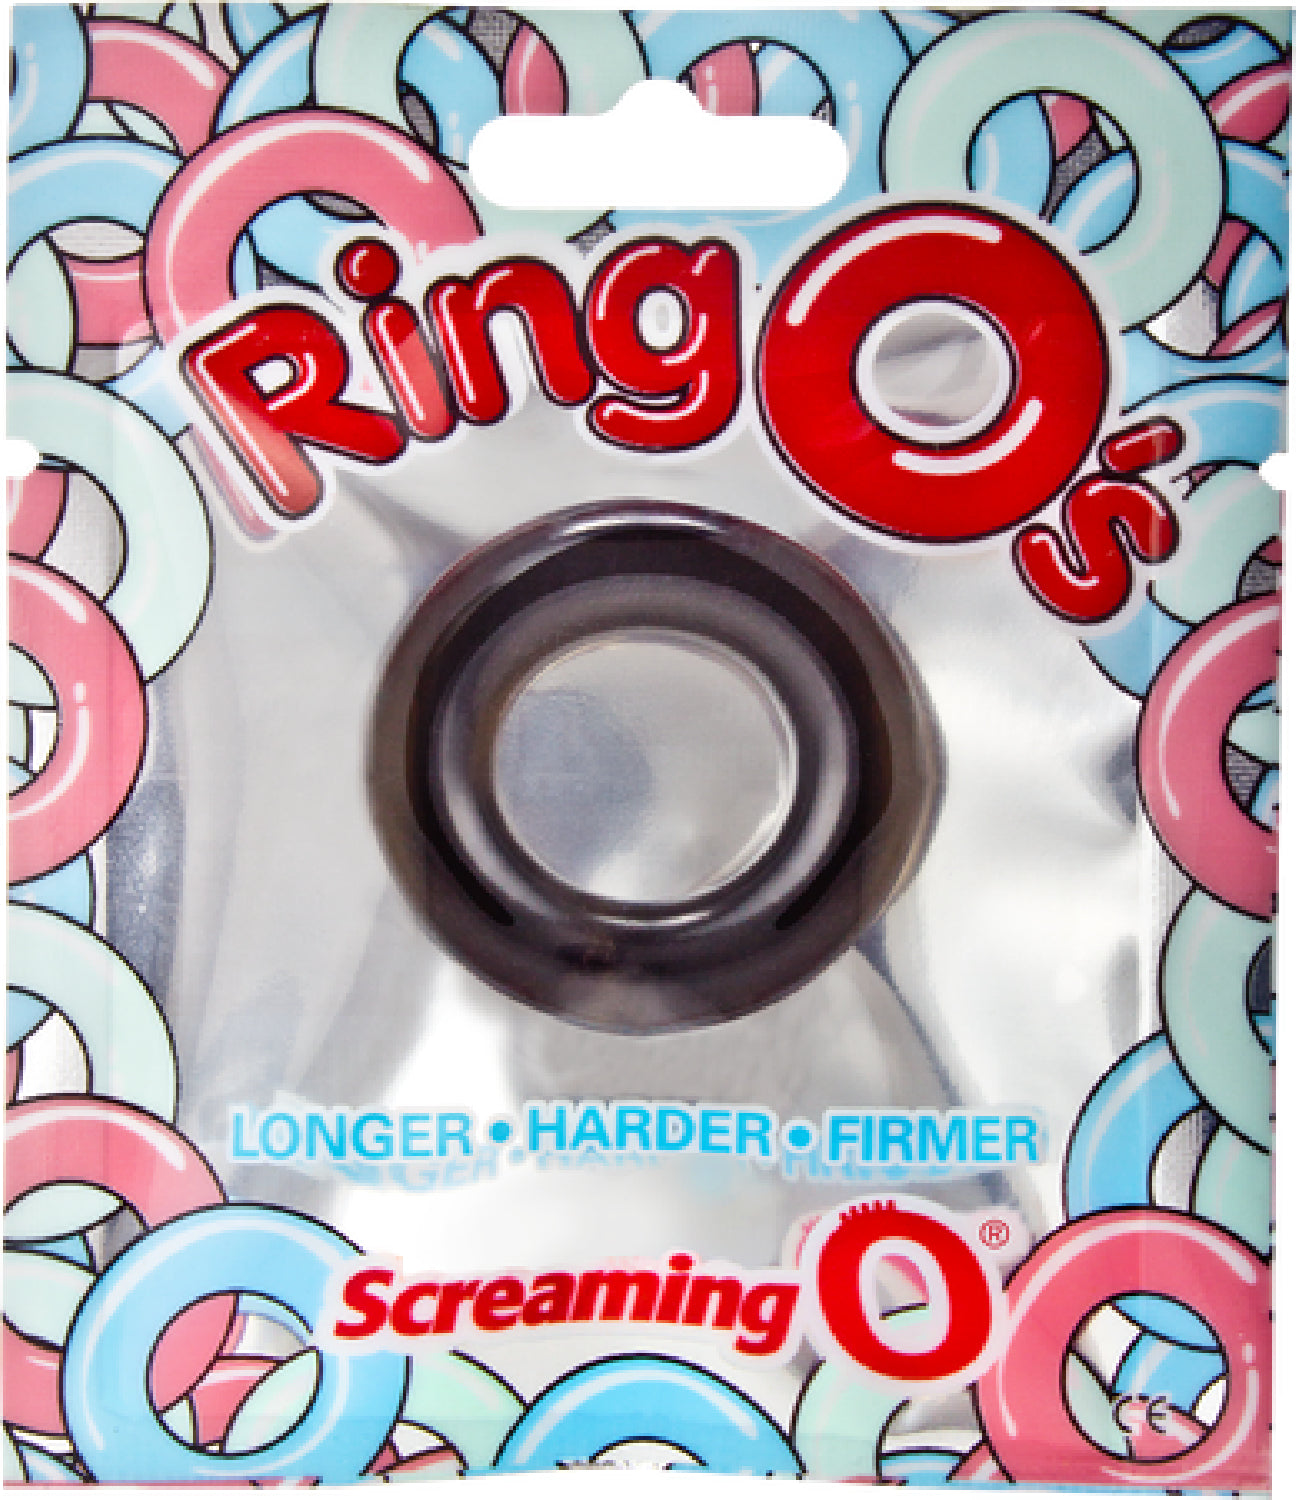 RingO - One Stop Adult Shop